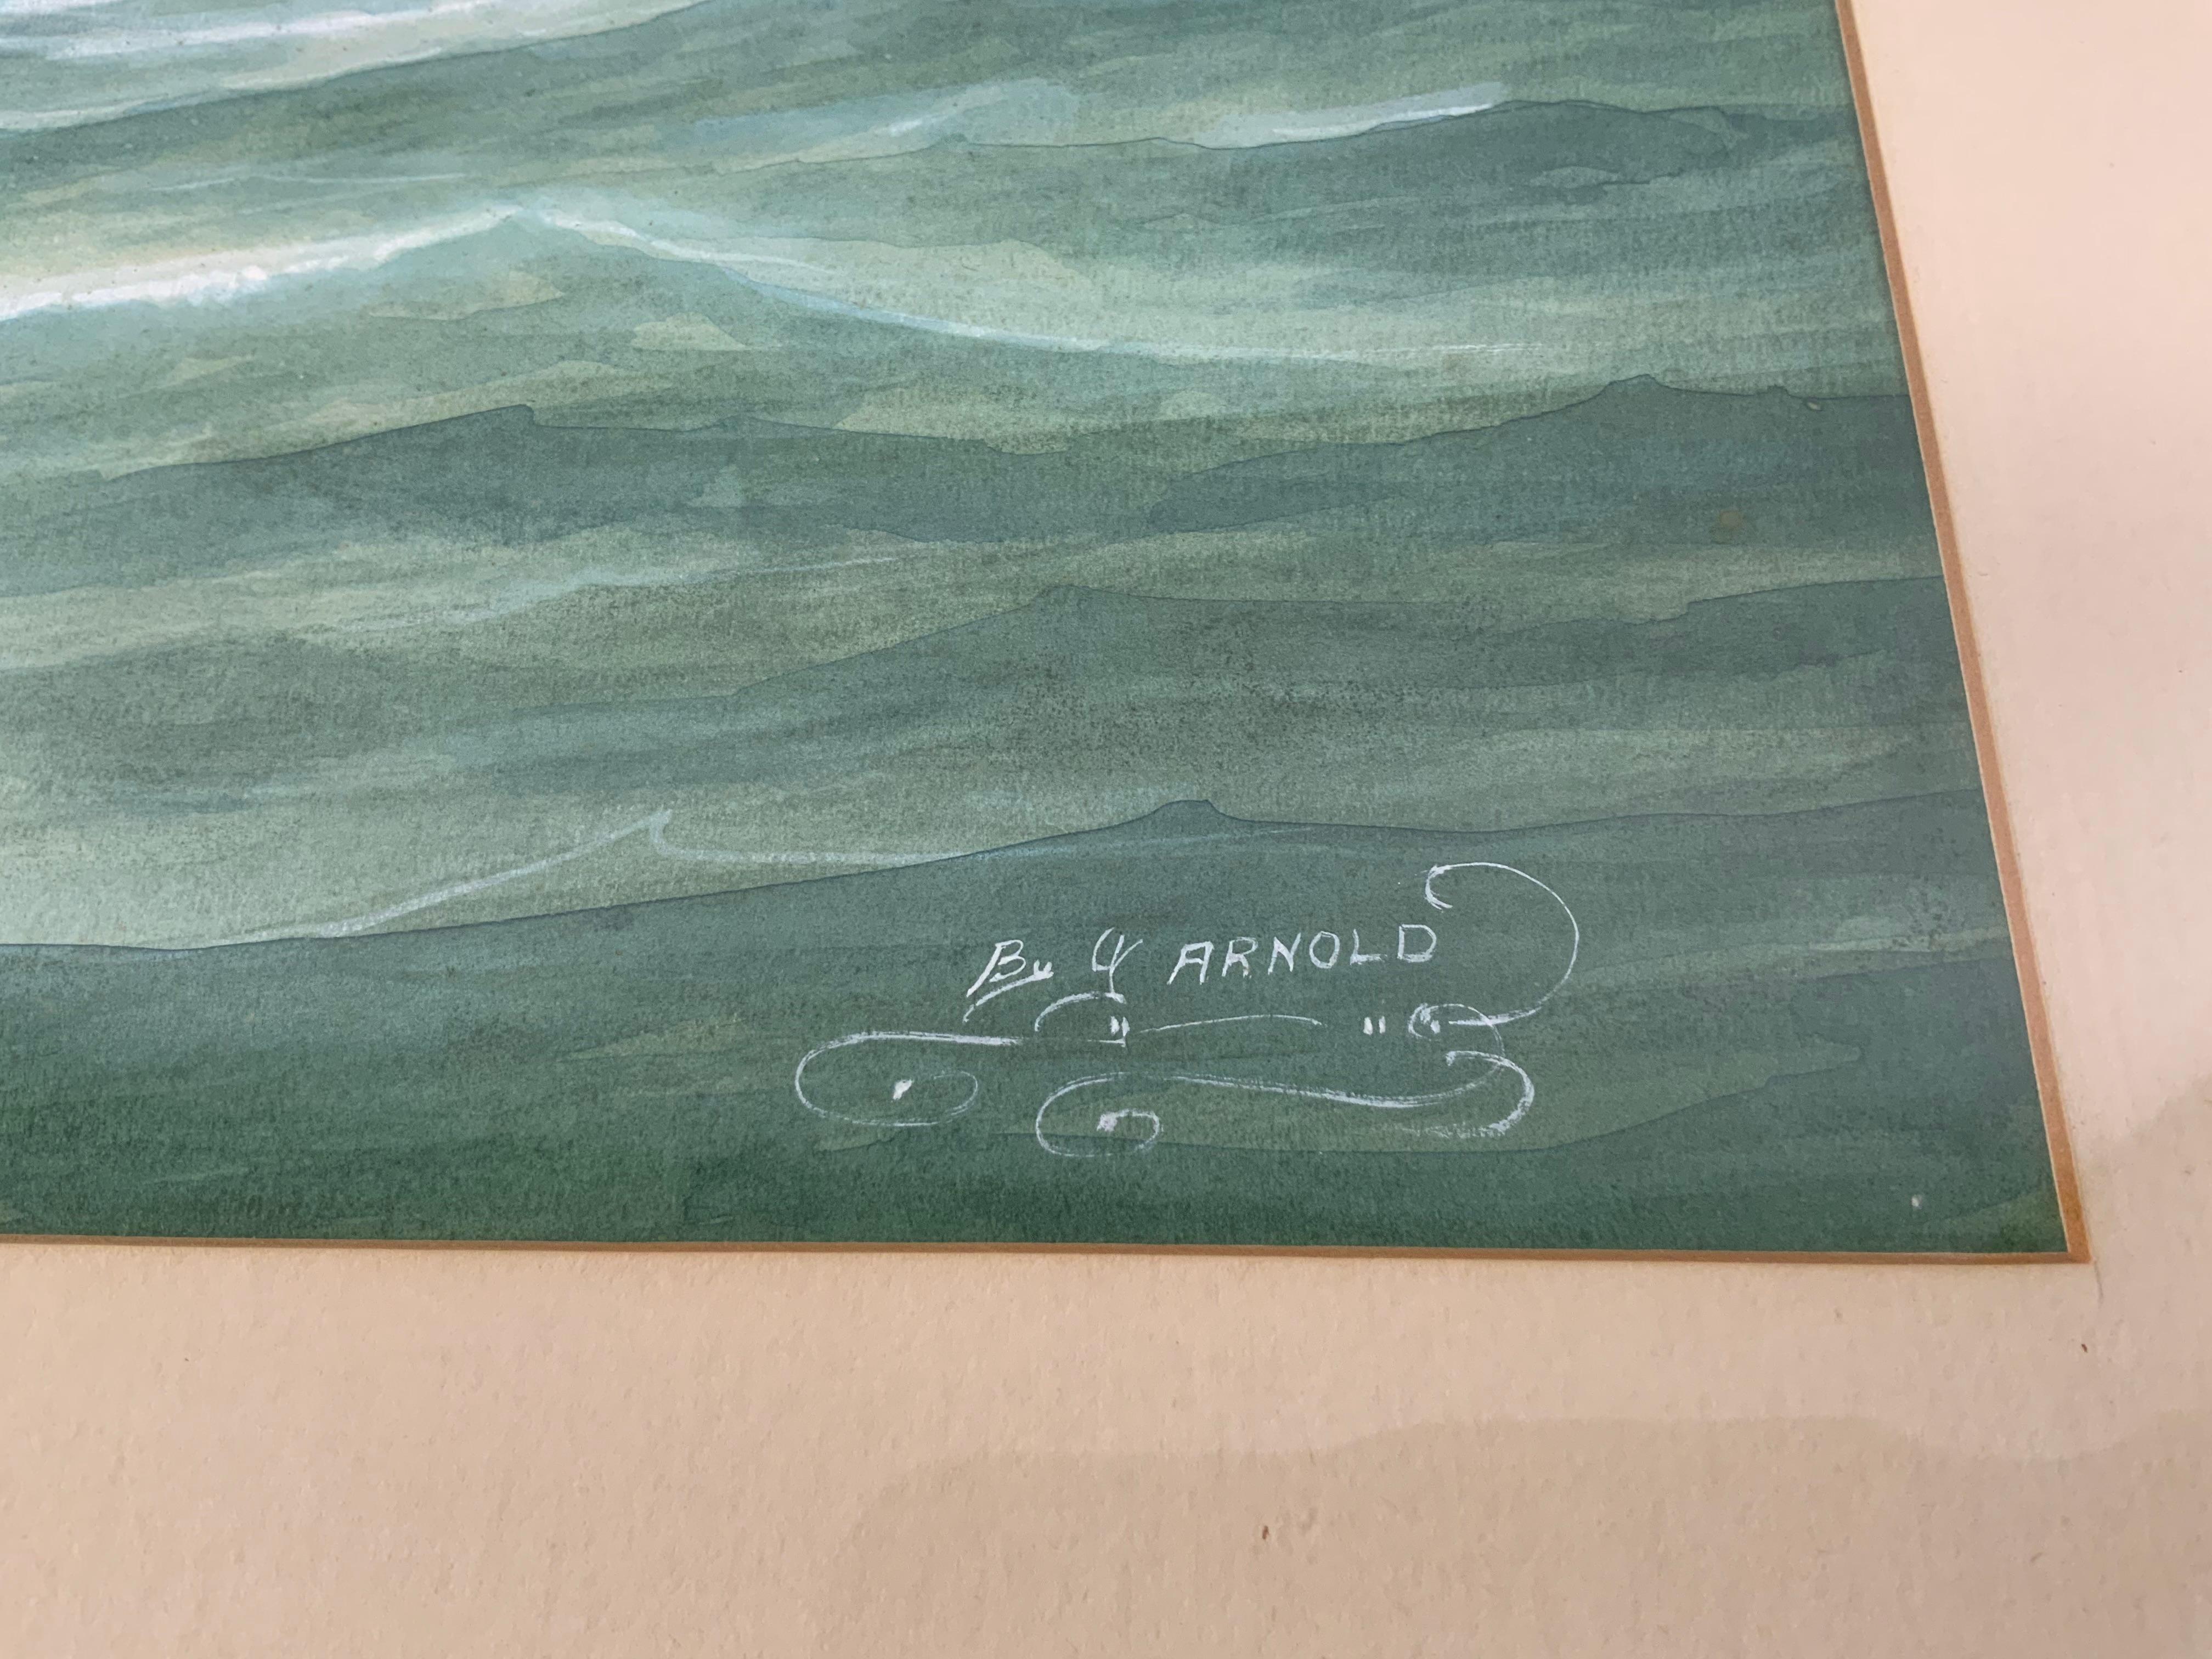 North American Jay Arnold Marine Painting of Kobenhavn For Sale